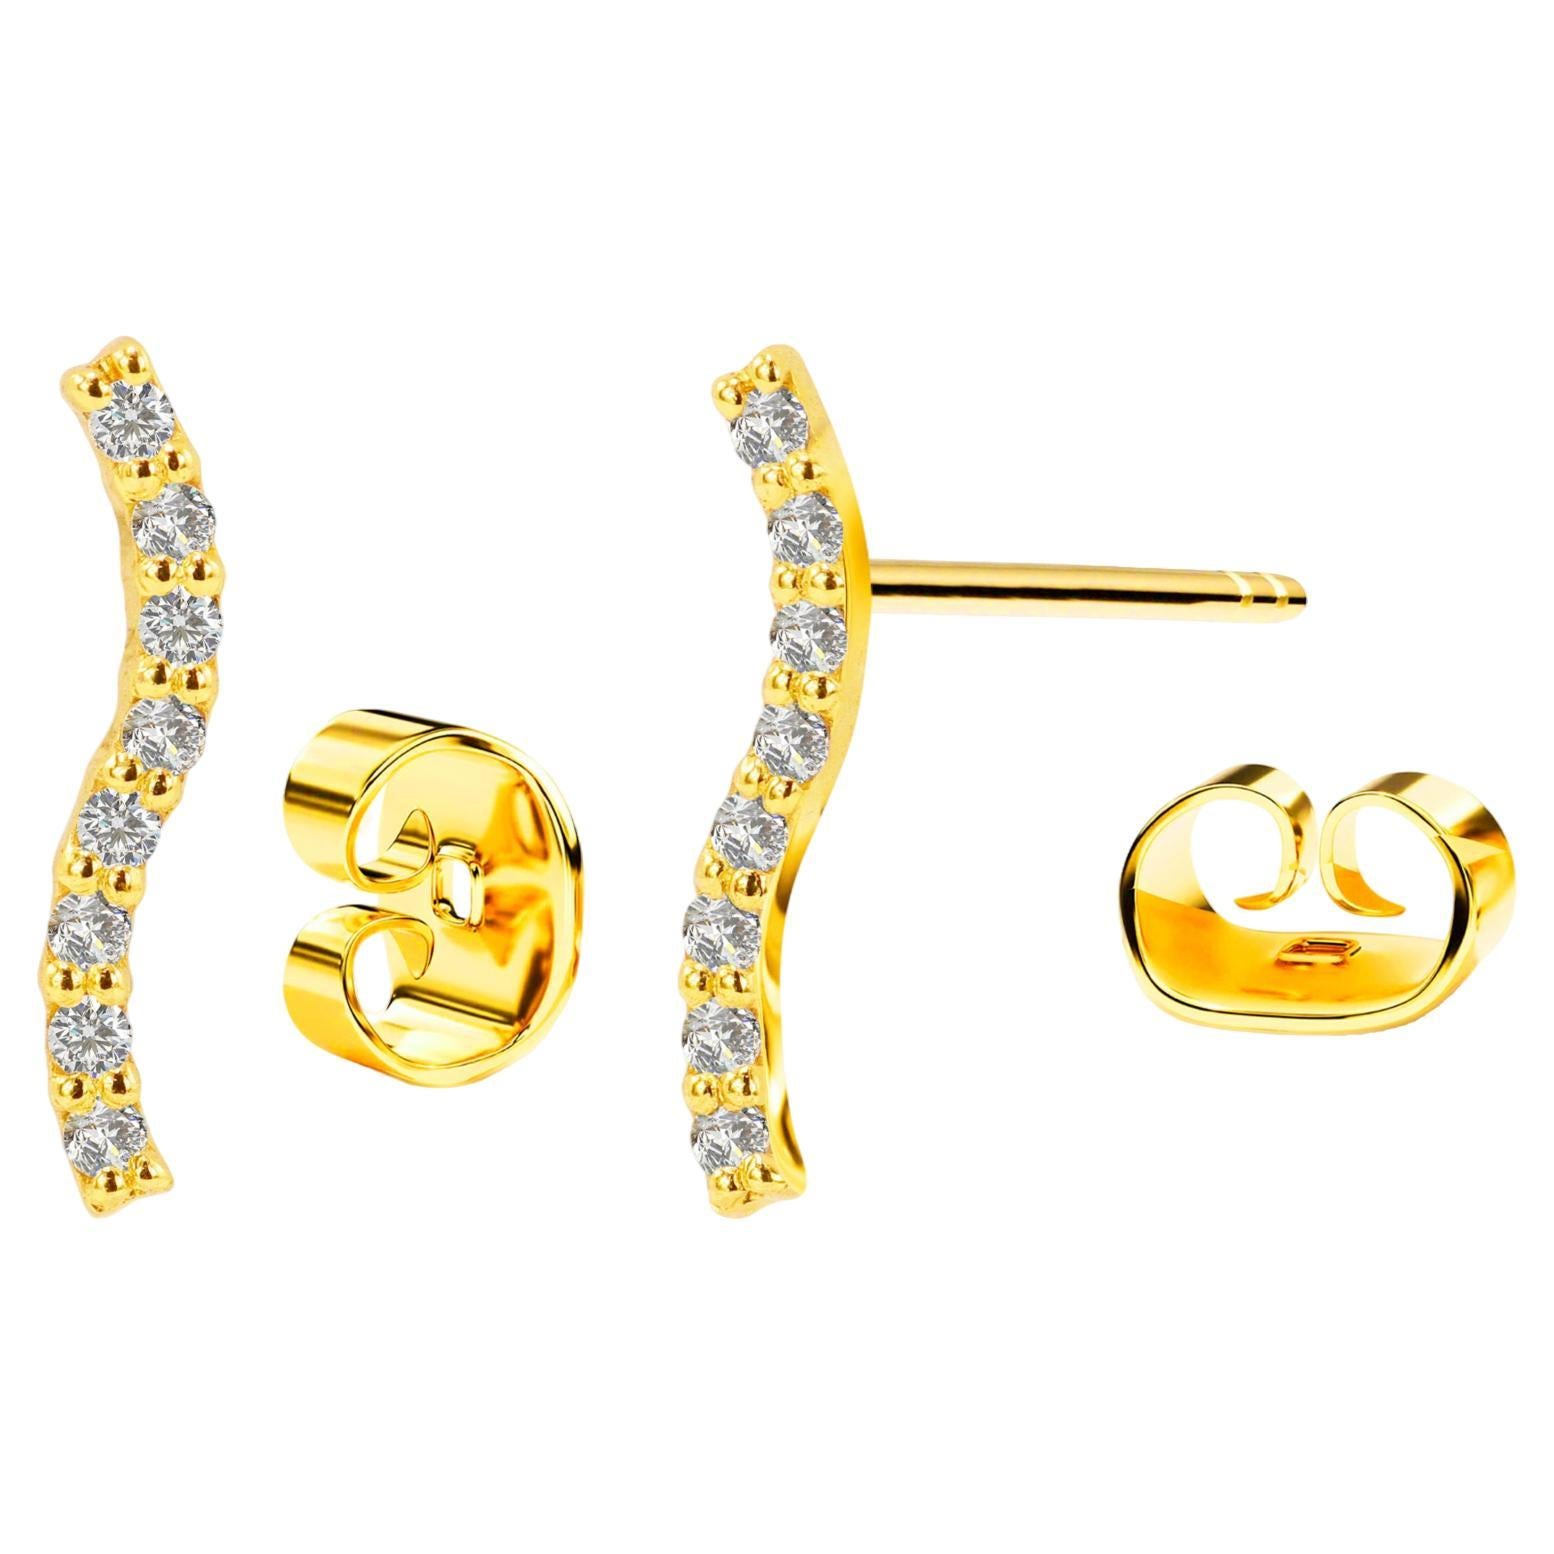 18k Gold Curved Bar Earrings Diamond Studs Minimalist Trendy Earrings For Sale